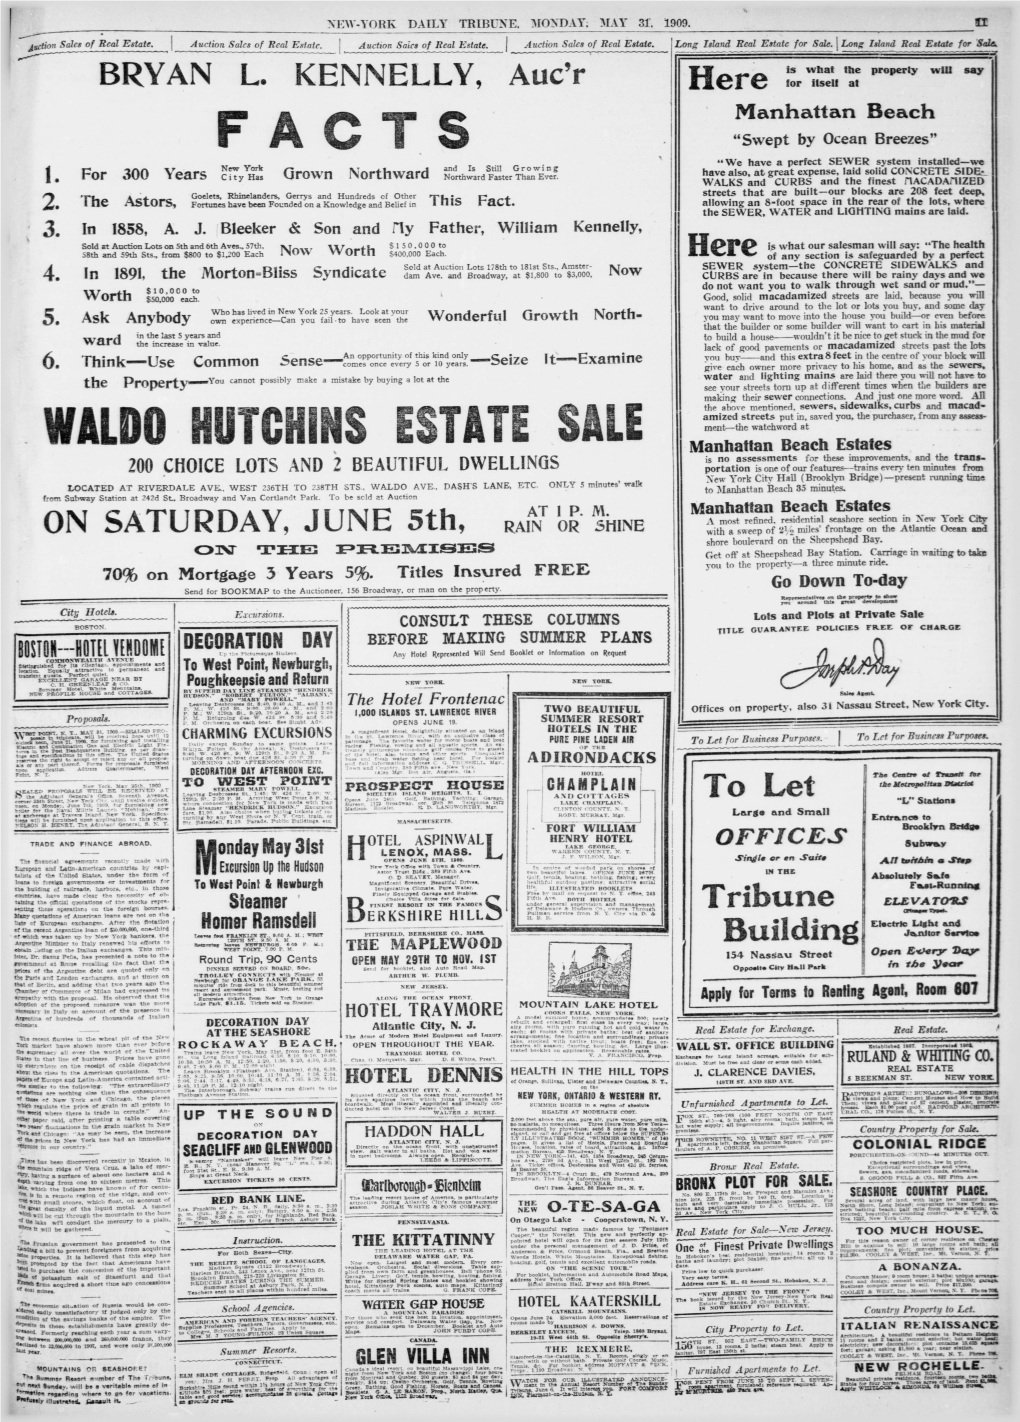 Waldo Hutchins Estate Sale